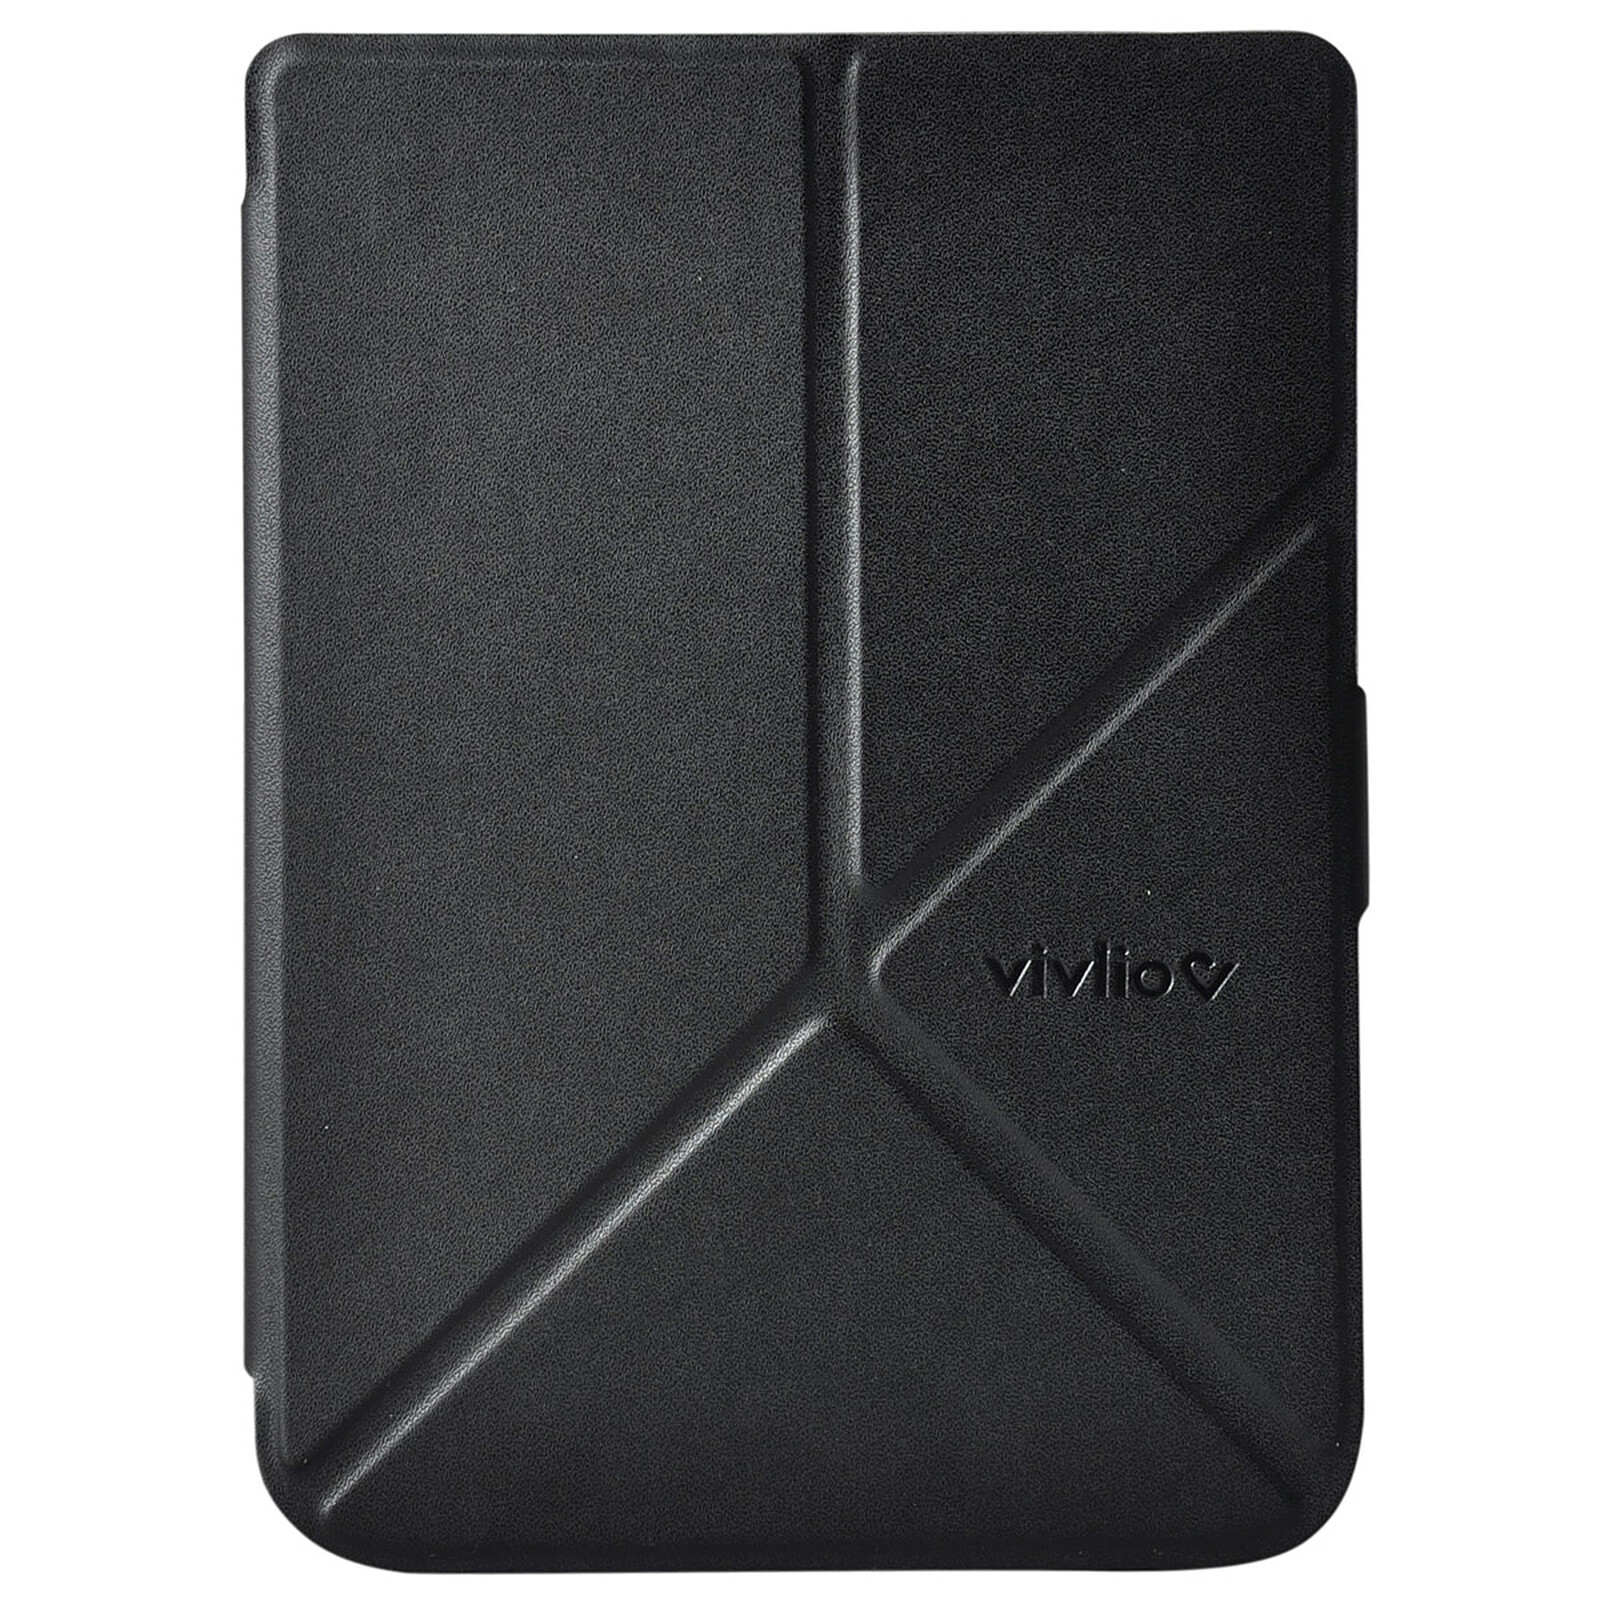 Vivlio Cover TL4/TL5/HD Black - E-reader - LDLC 3-year warranty